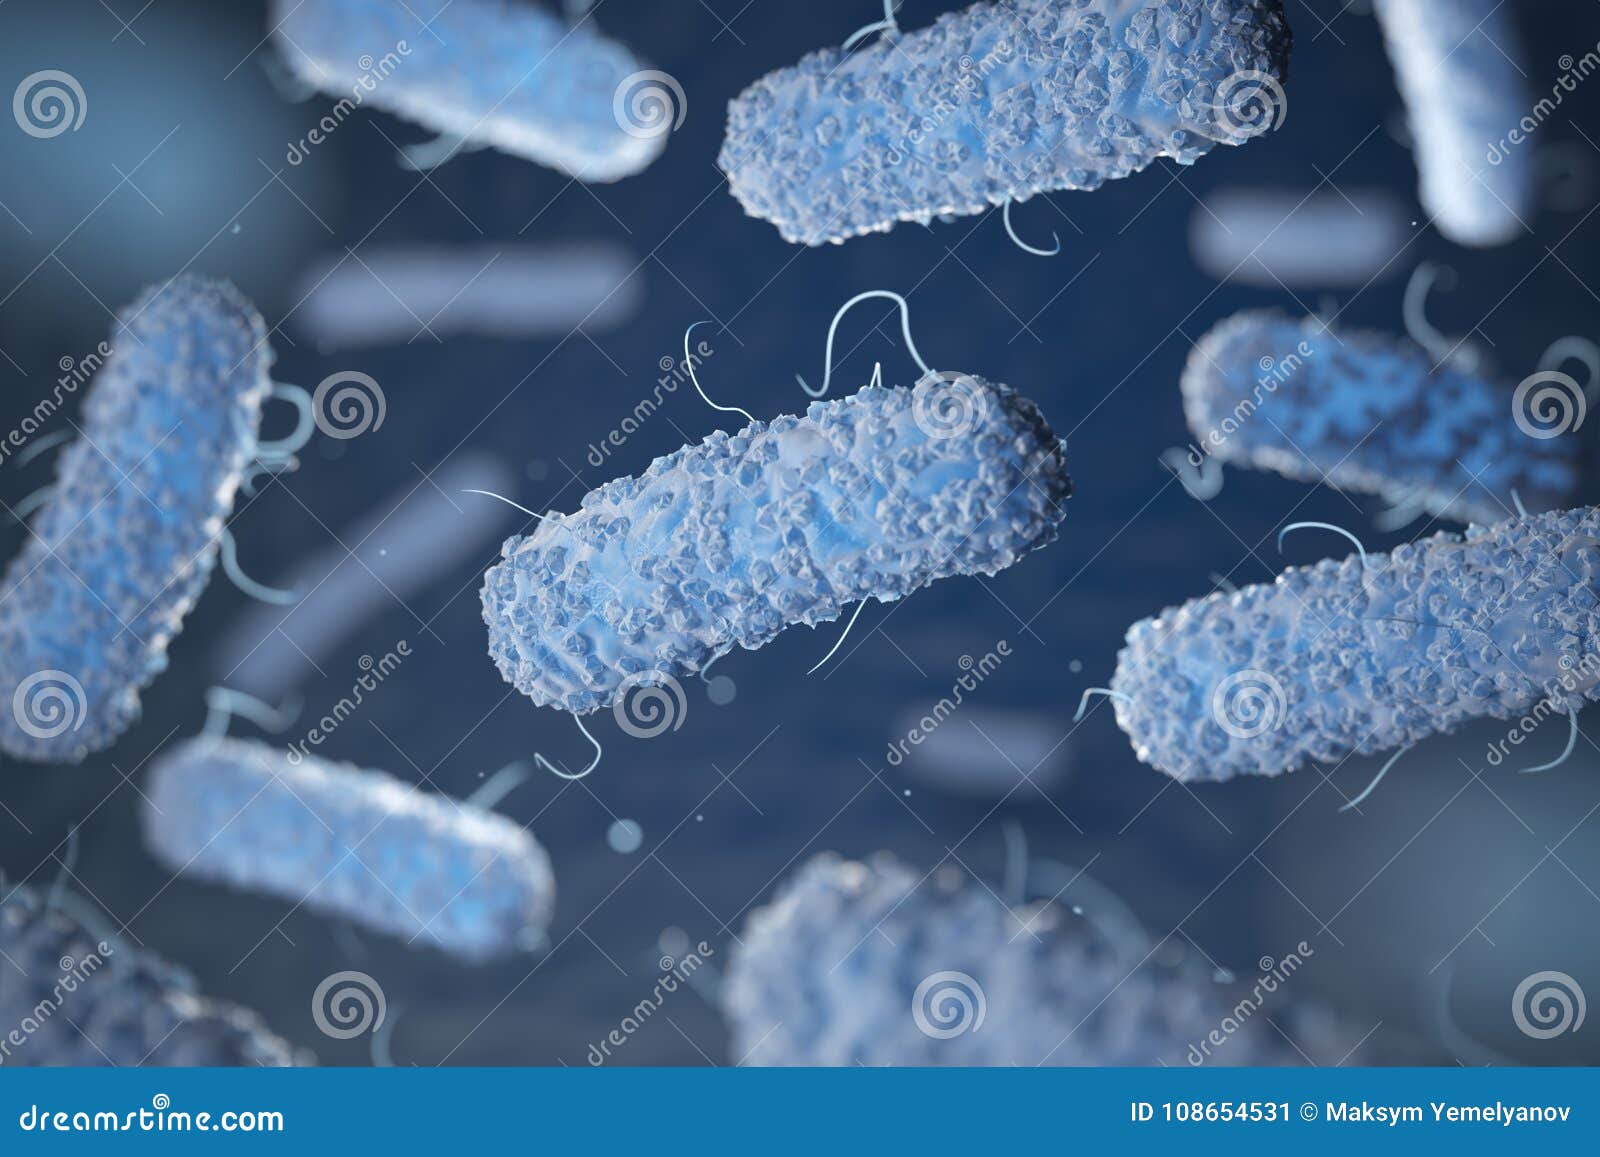 enterobacterias. gram-negative bacterias